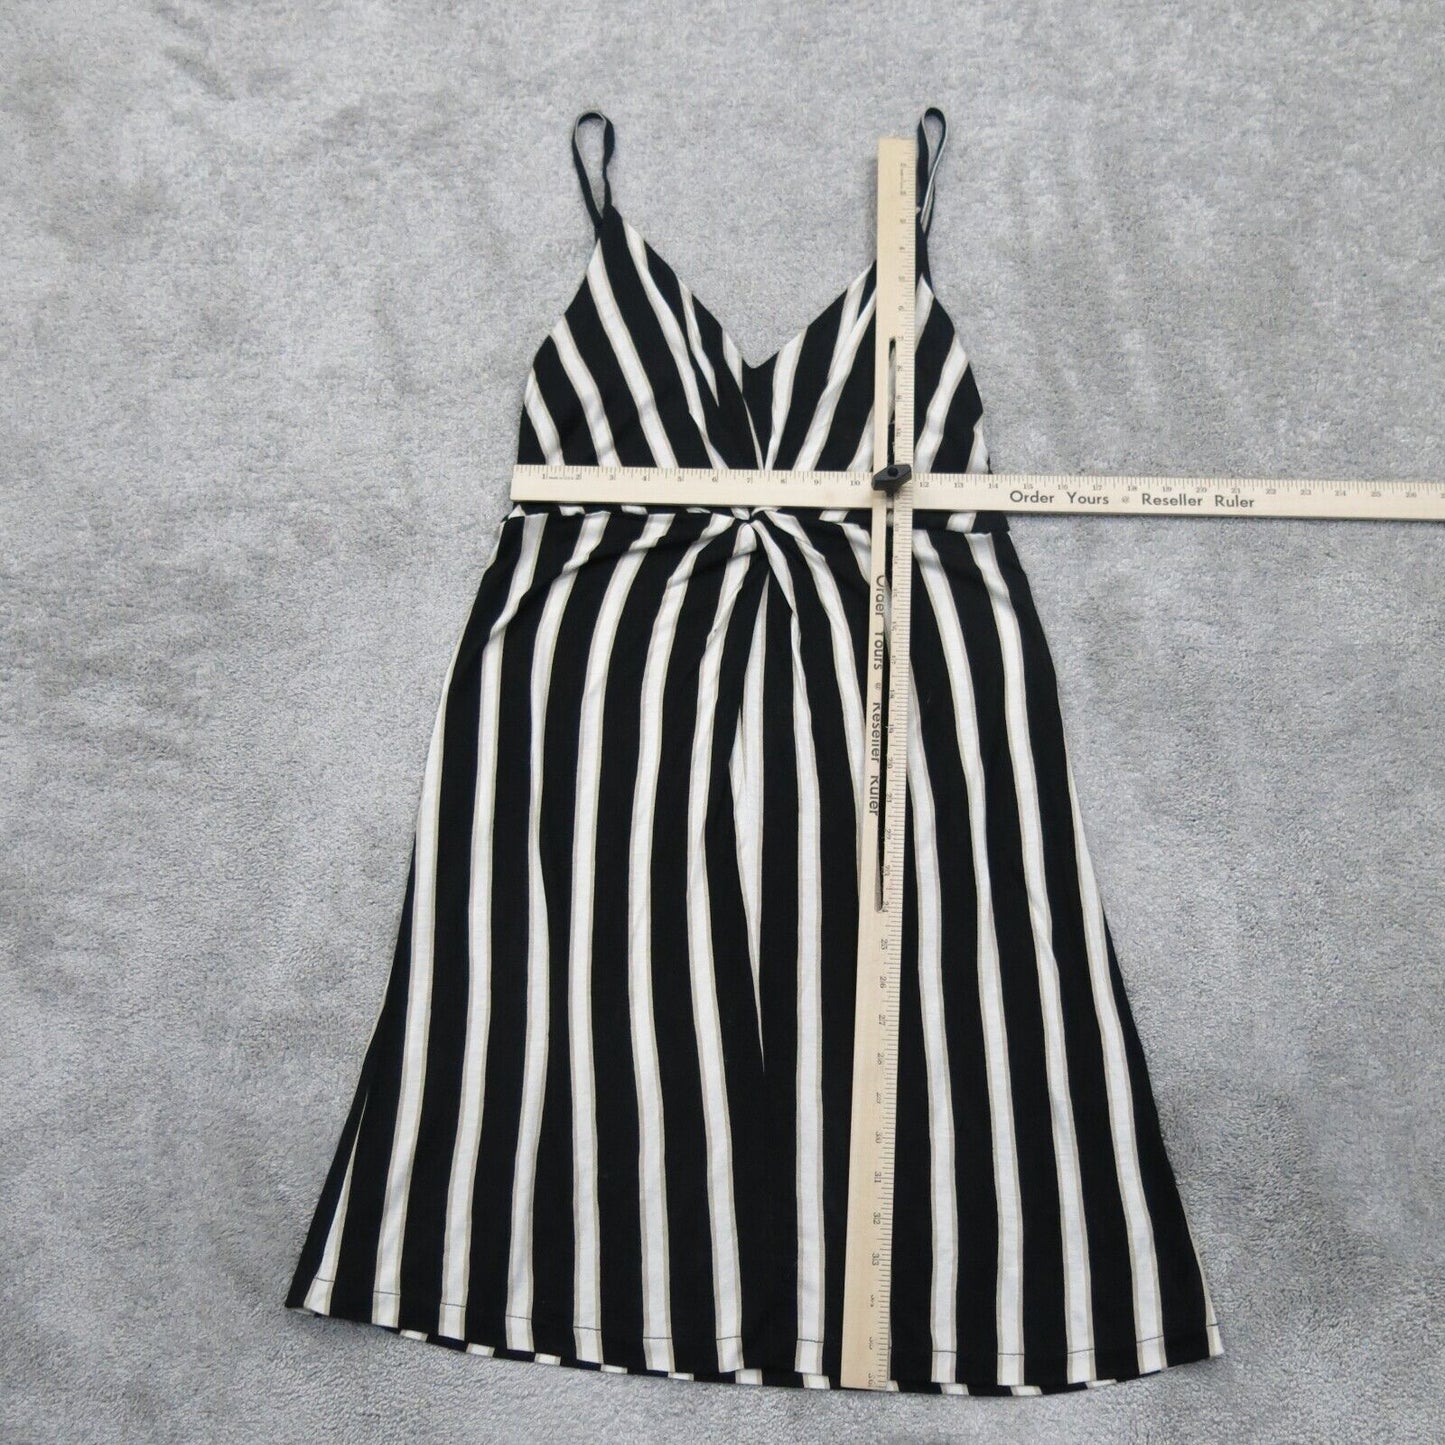 H&M Womens V Neck A Line Mini Dress Cup Coverage Striped White Black Size Medium